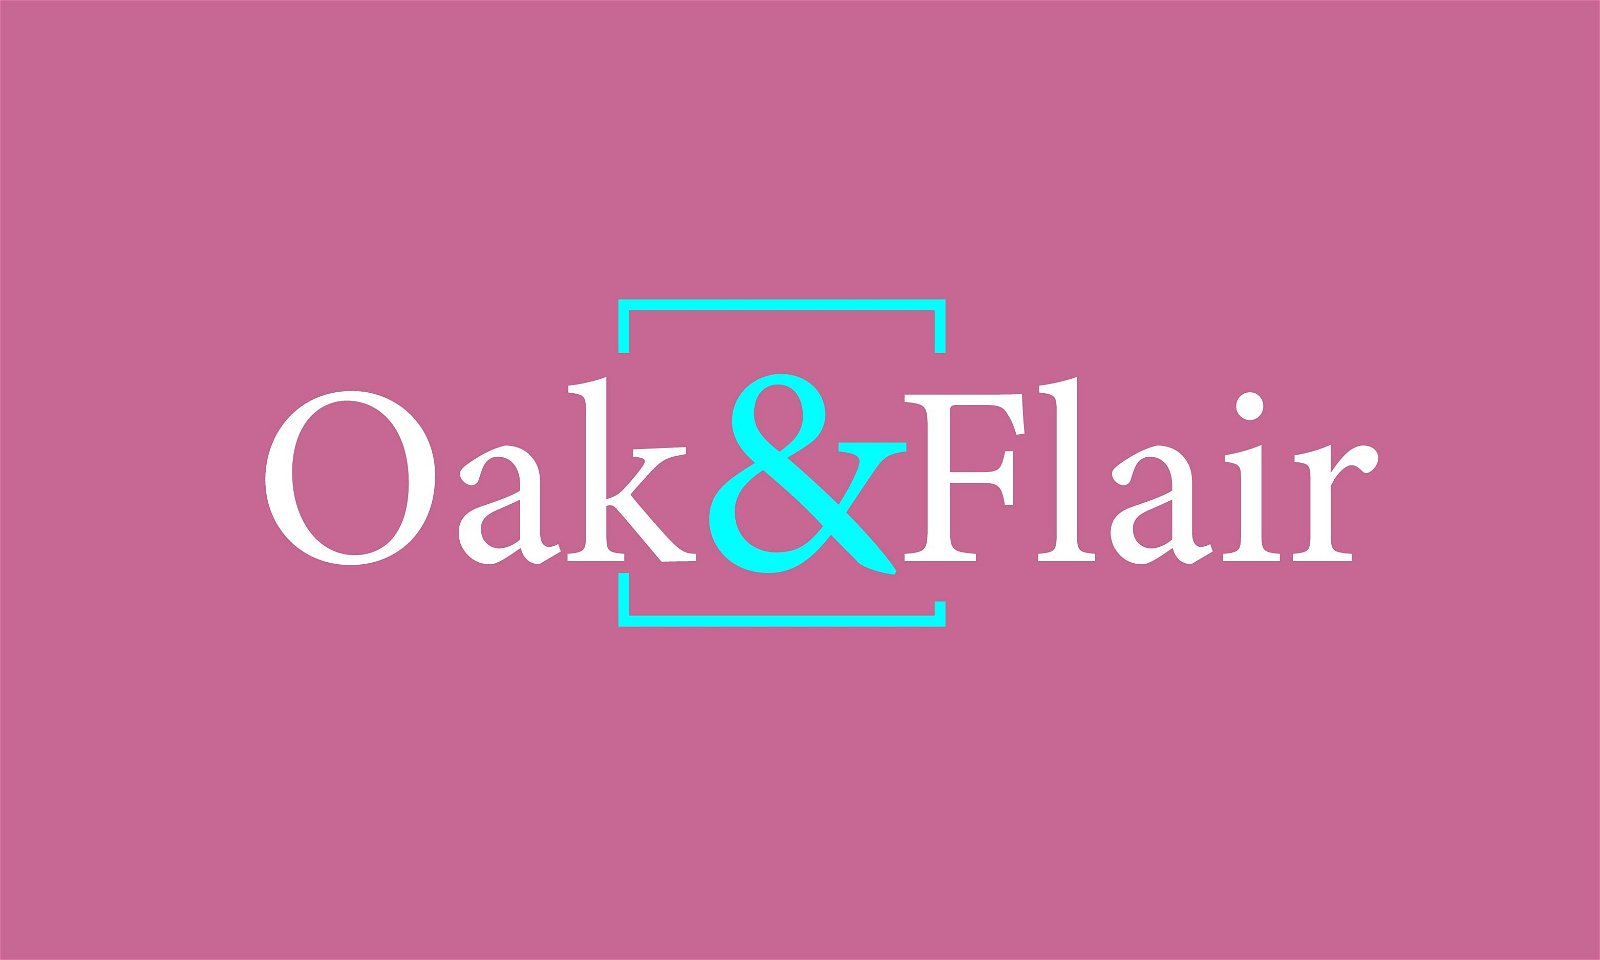 OakAndFlair.com - Creative brandable domain for sale